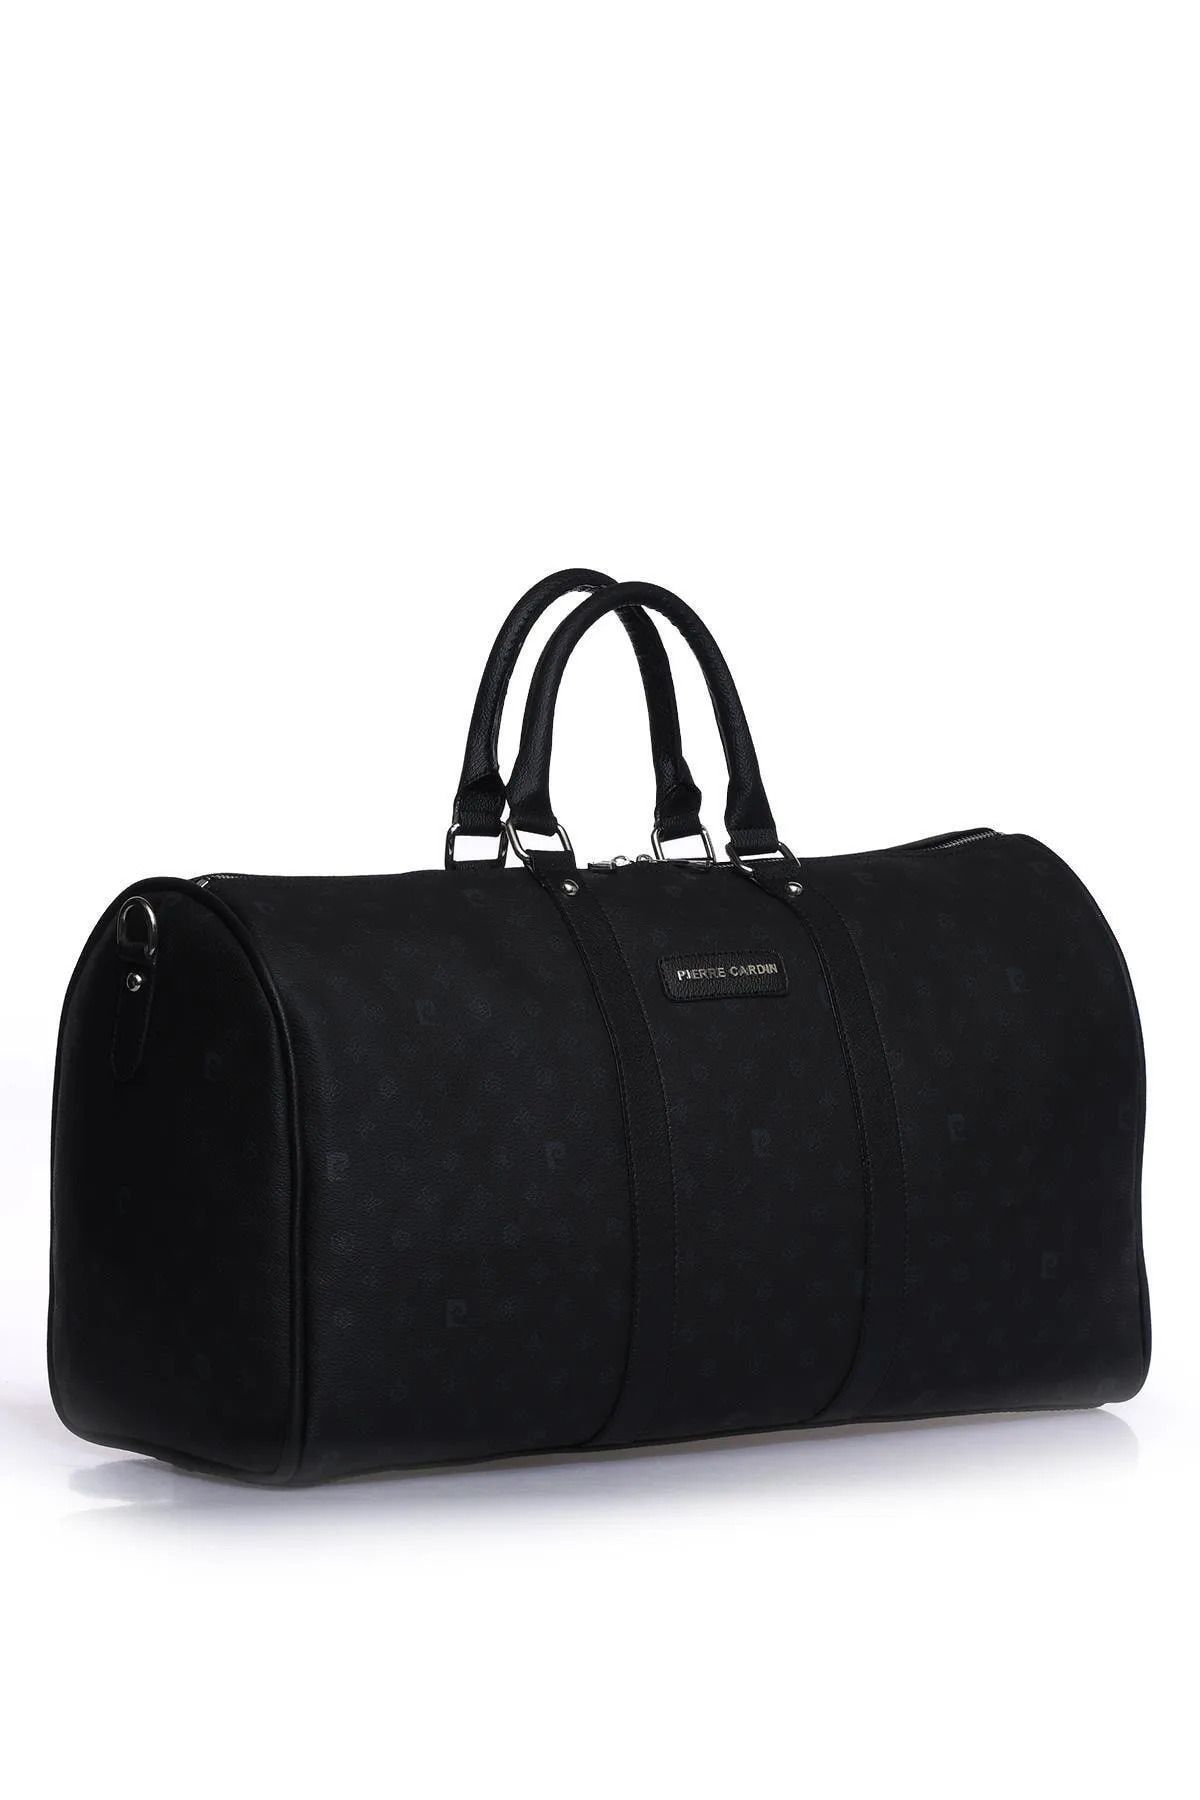 Pierre Cardin چمدان دستی و کیف ورزشی سیاه سفید